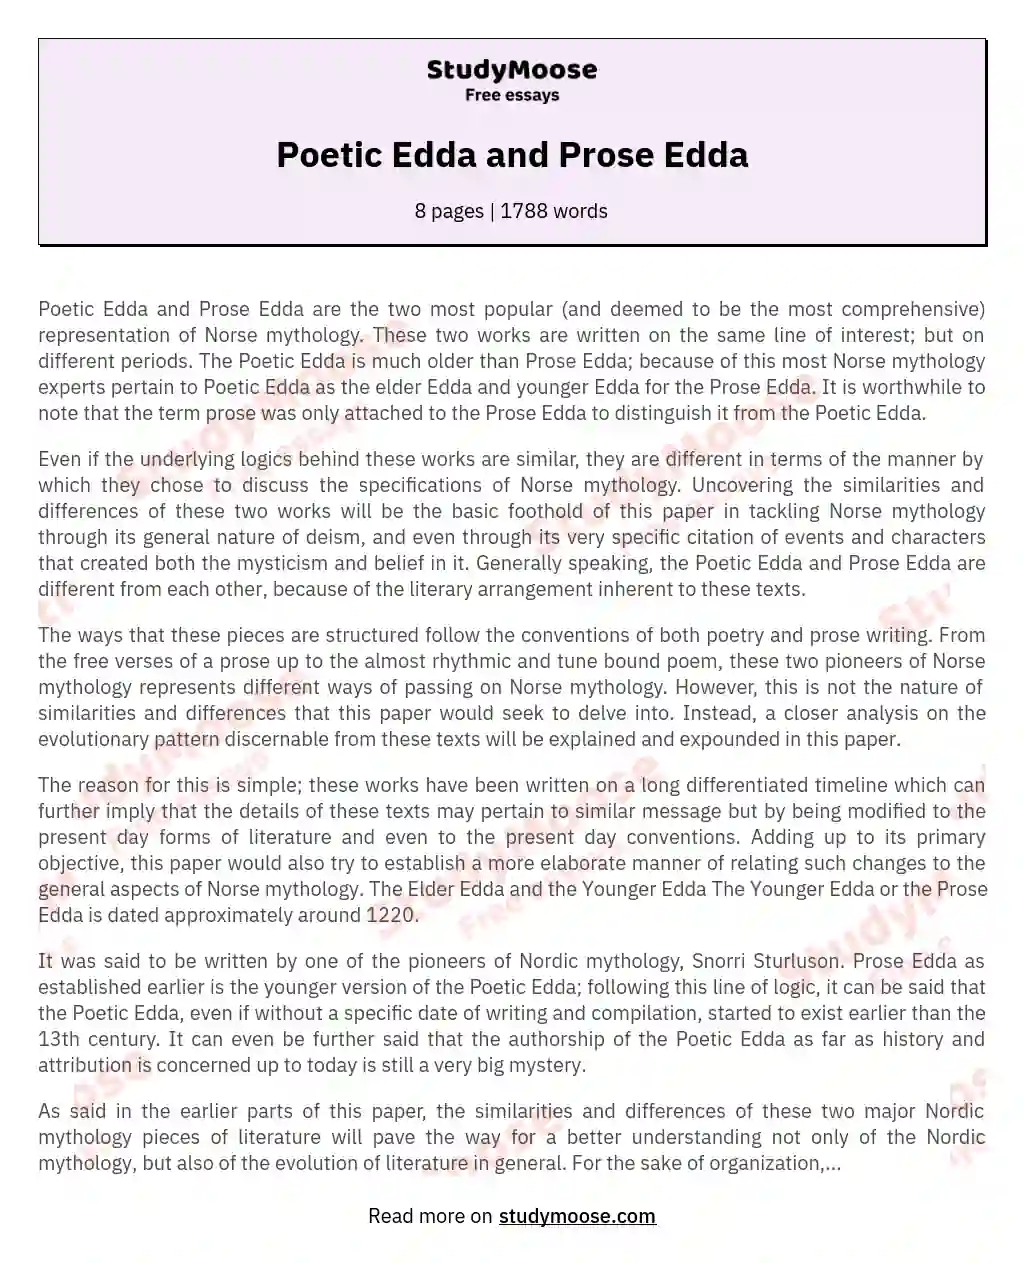 Poetic Edda and Prose Edda essay